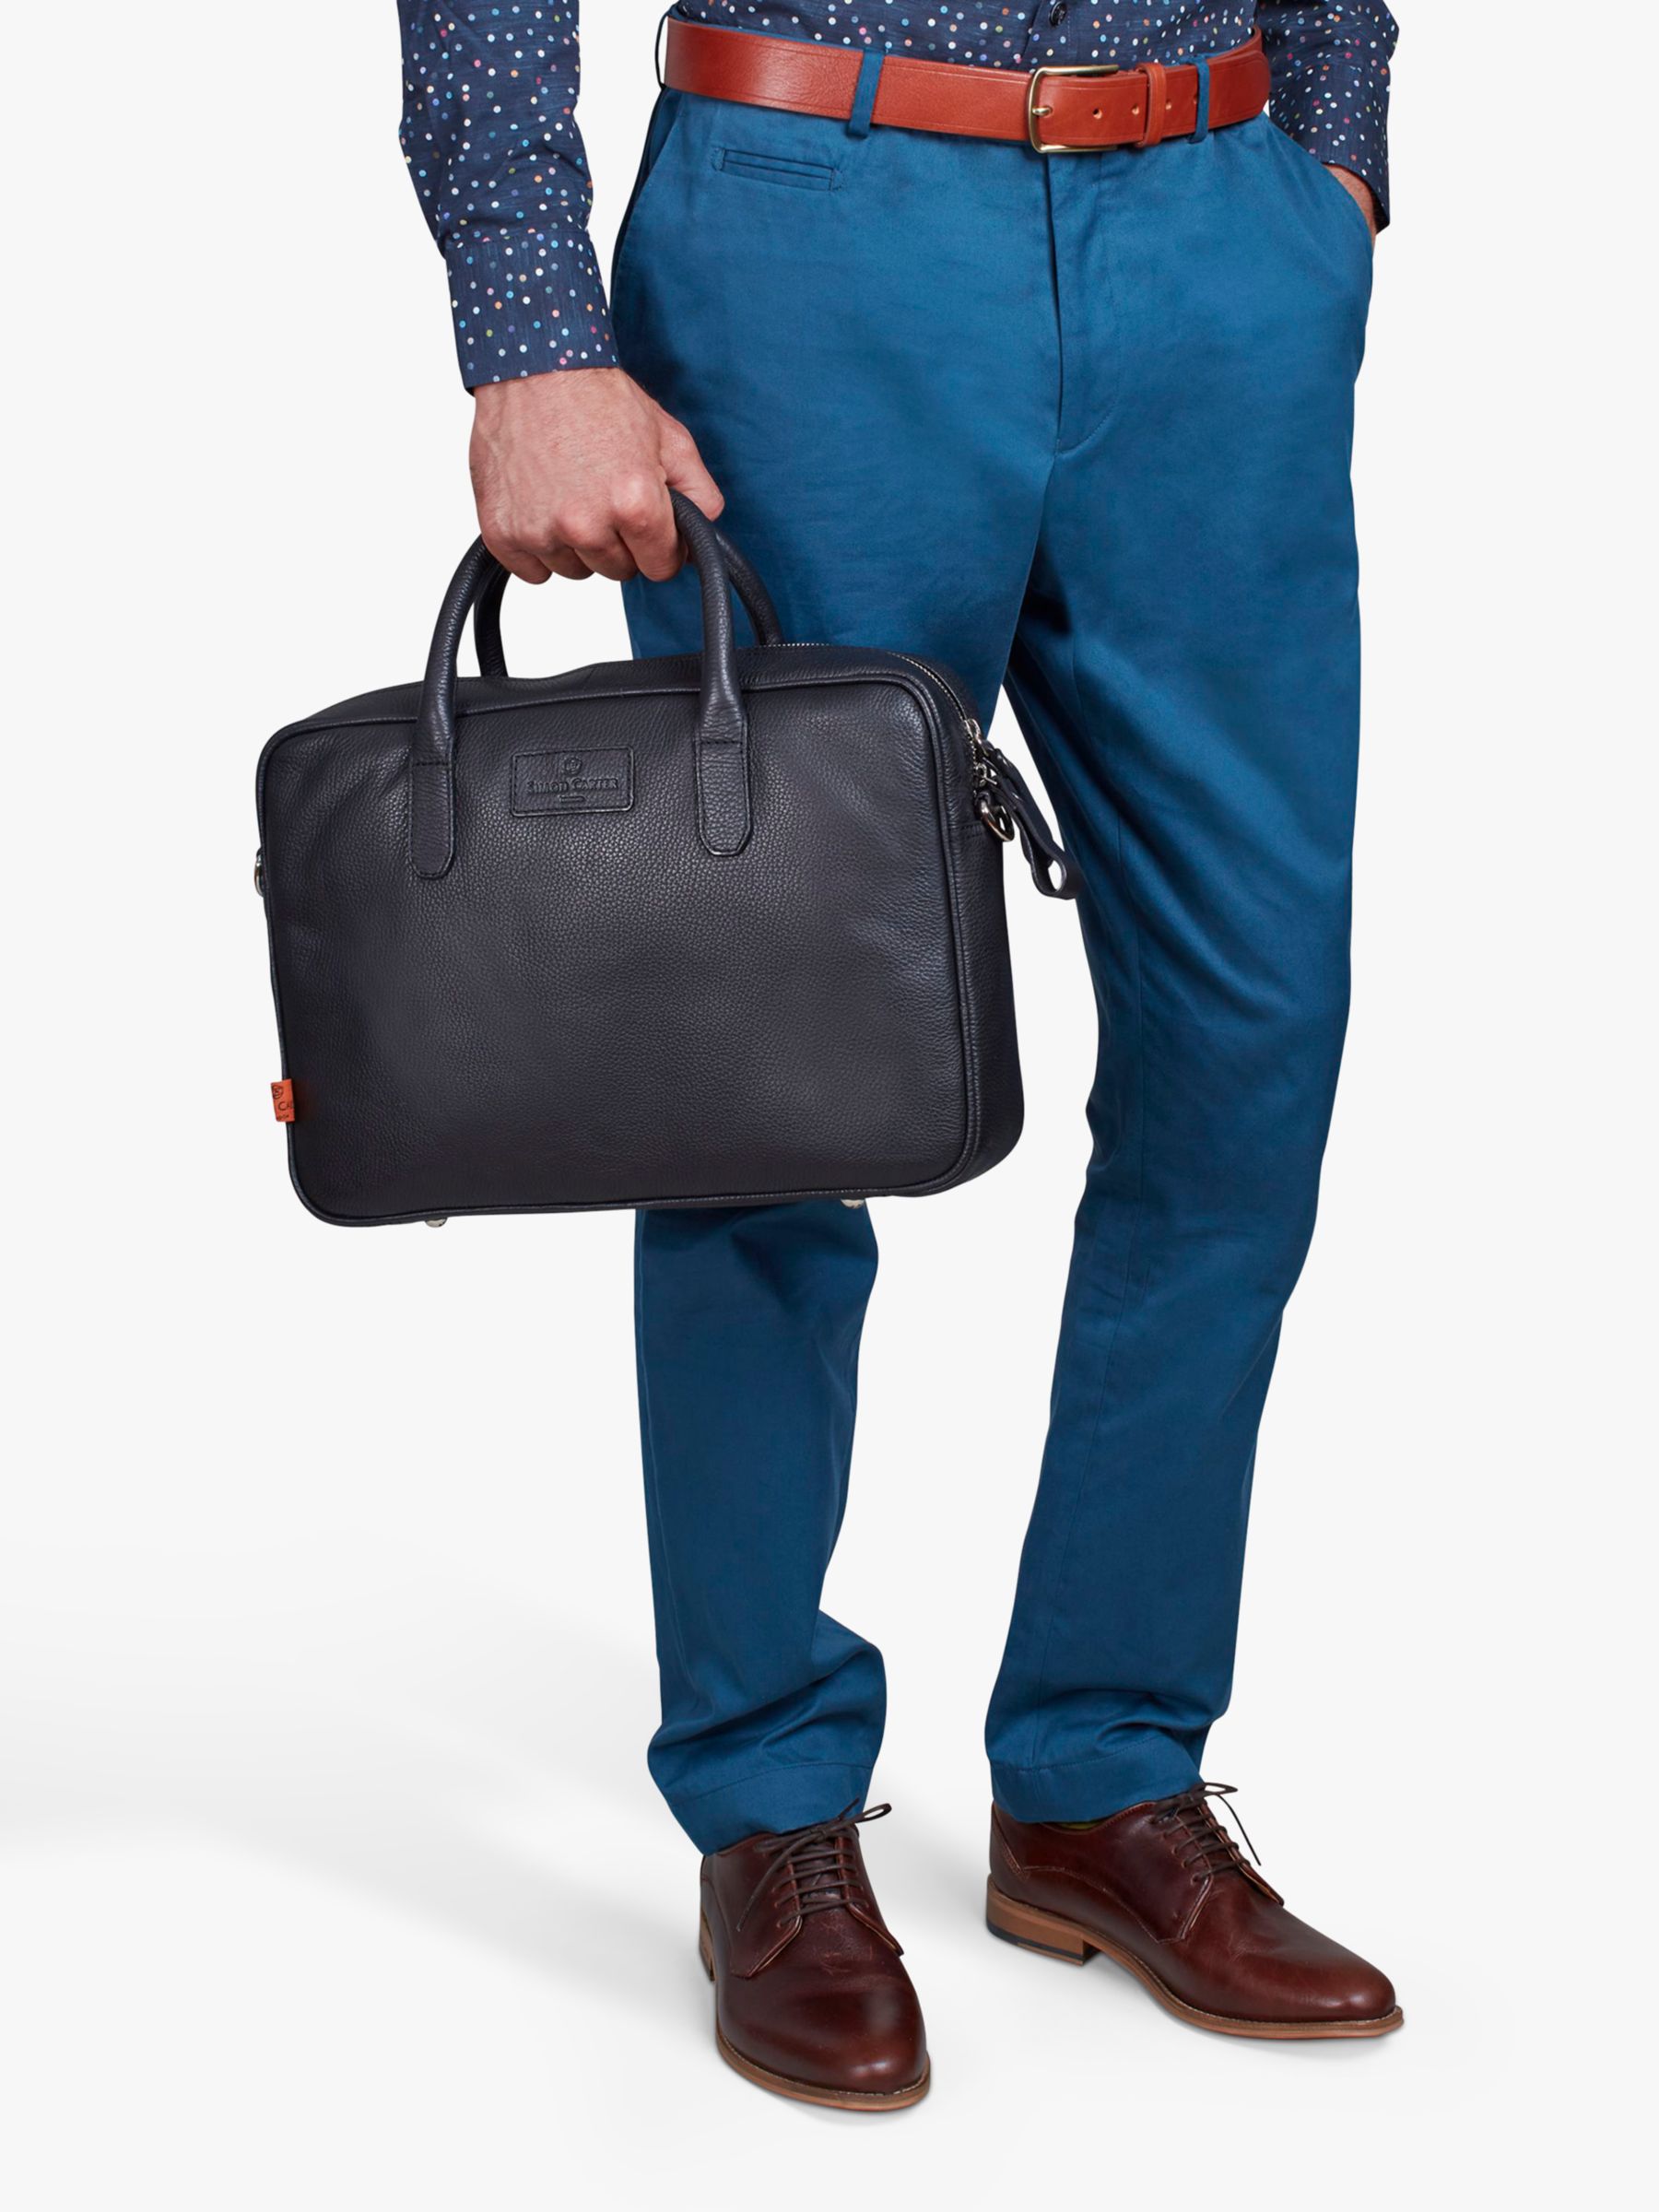 Simon Carter Hove Leather Laptop Bag, Black at John Lewis & Partners